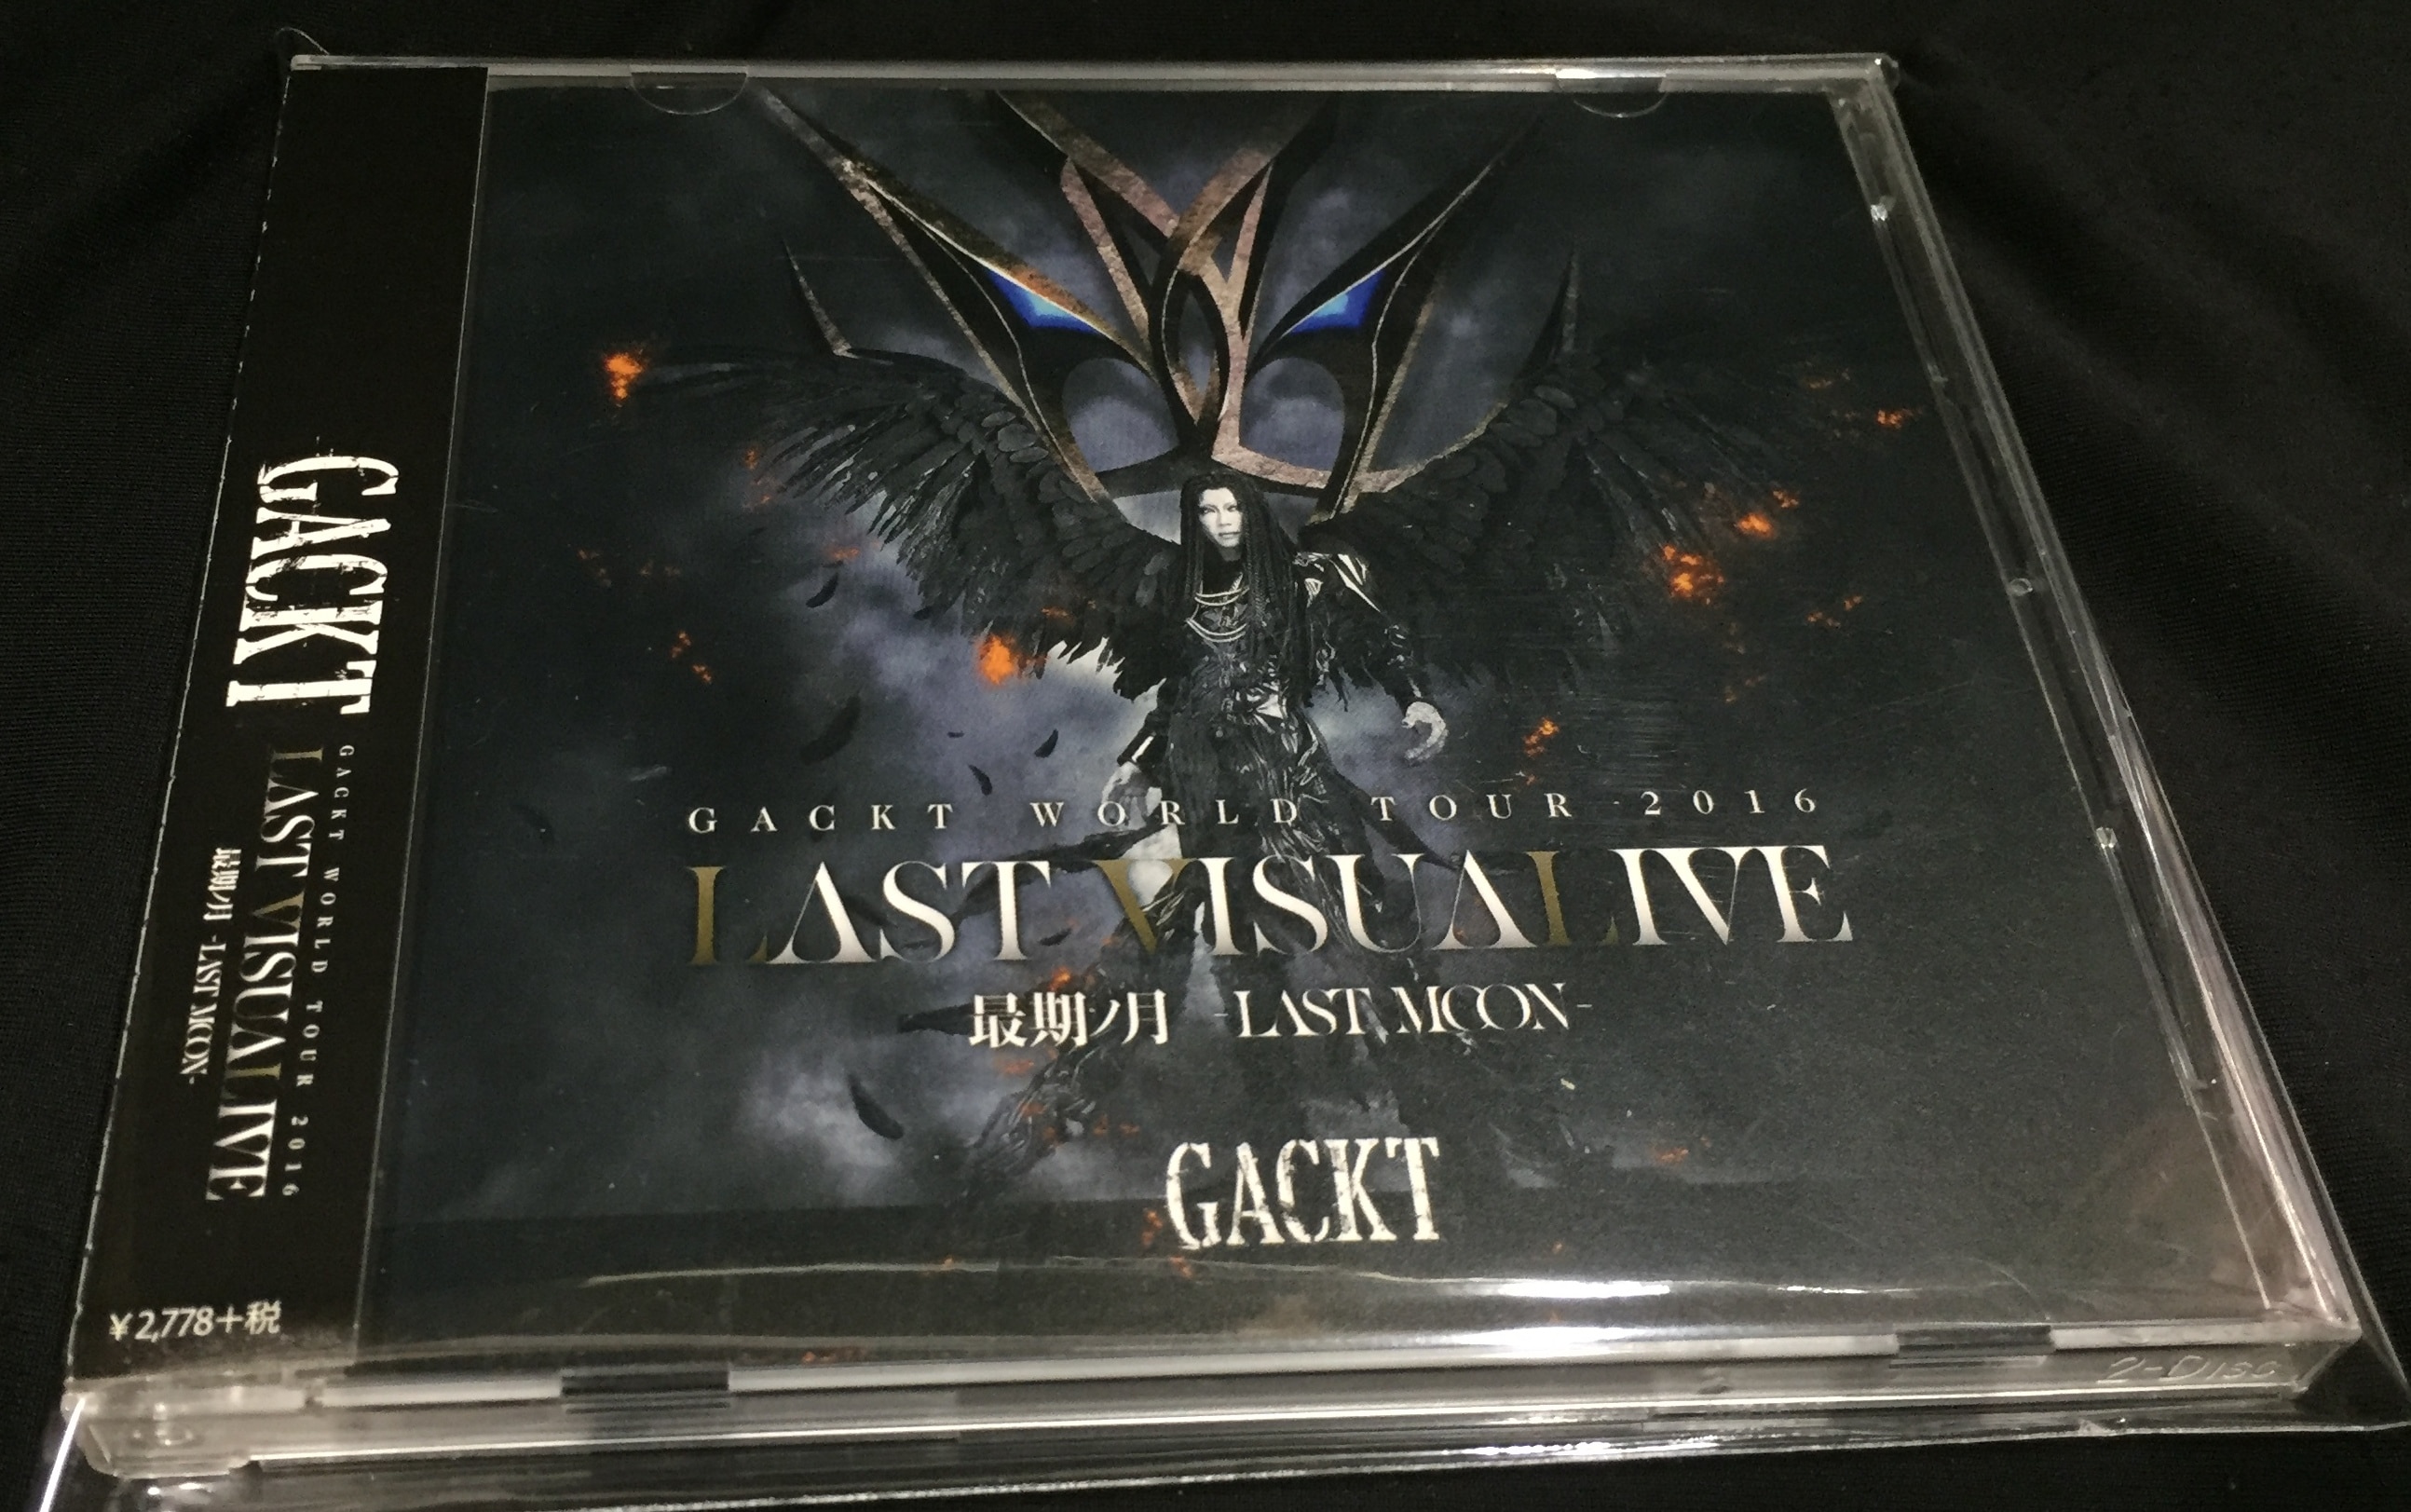 GACKT ライブ会場限定(2CD) GACKT WORLD TOUR 2016 LAST VISUALIVE ...